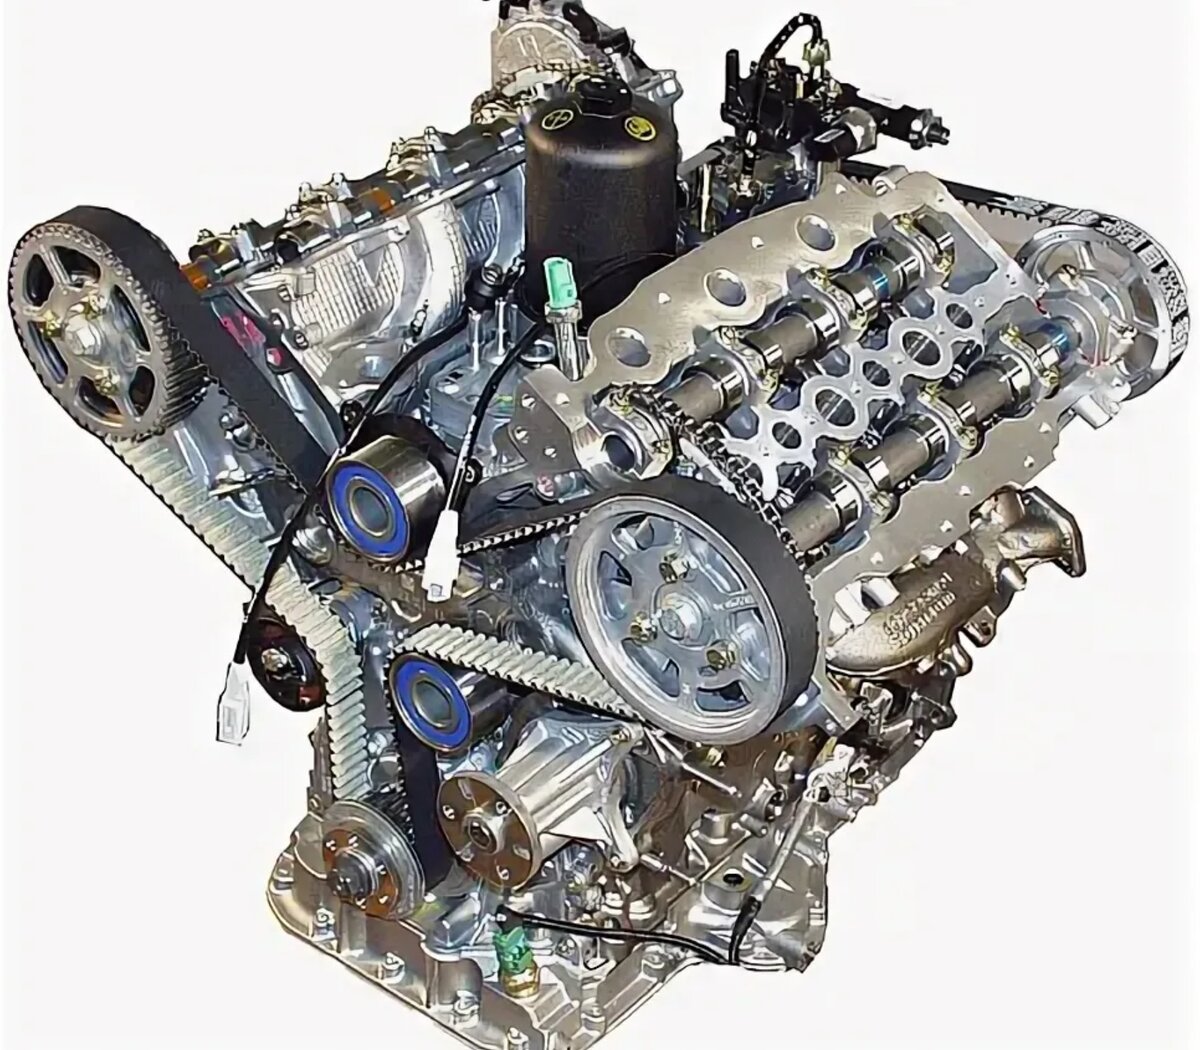 4.4 дизель. Двигатель Discovery 3 2.7 дизель. Двигатель Land Rover Discovery 2.7. ГРМ ленд Ровер Дискавери 3 дизель 2.7. Двигатель Рендж Ровер спорт 3.0 дизель.